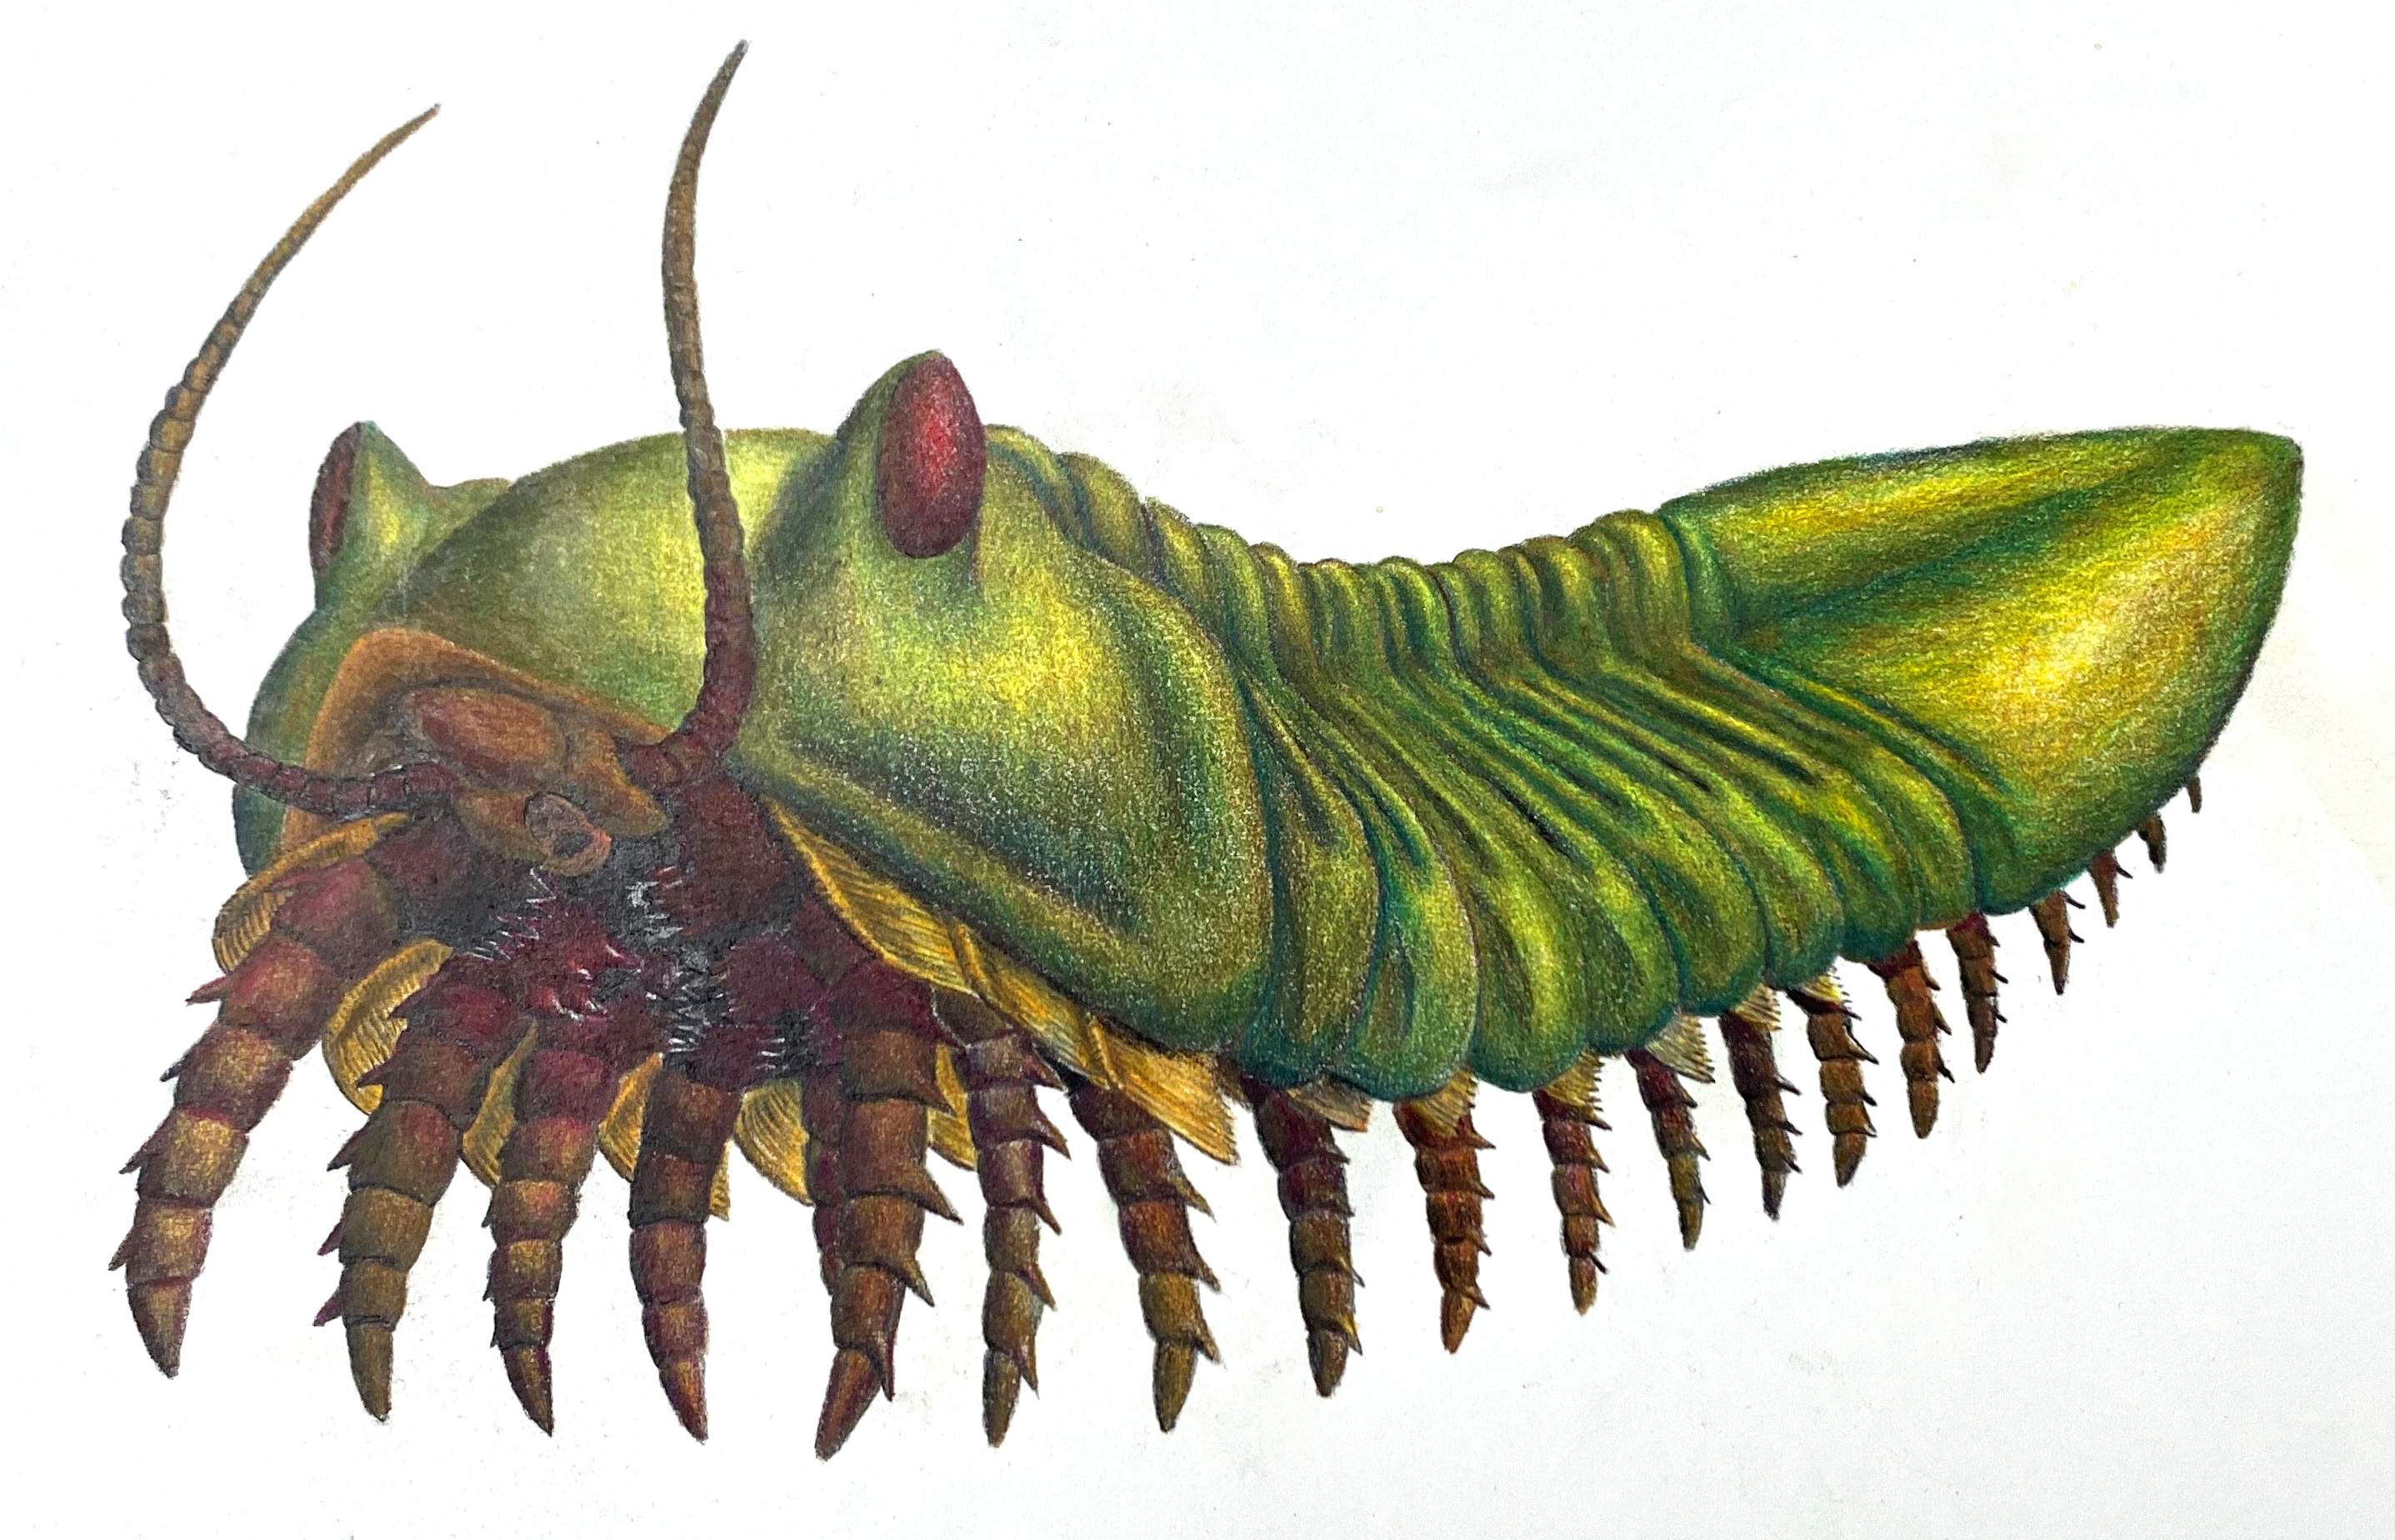 Green and yellow slug like slater creature with 20 odd hook like legs